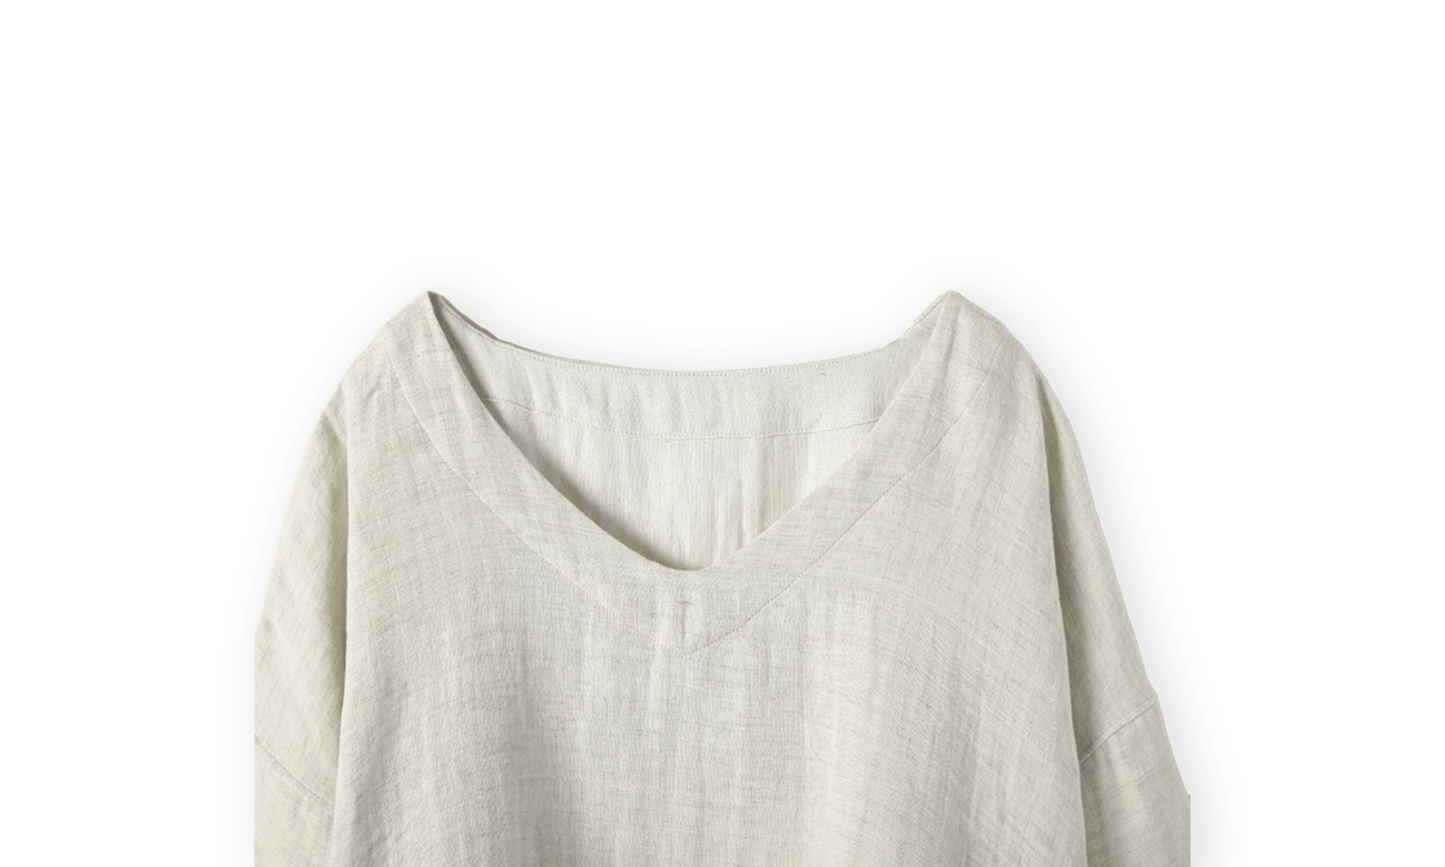 Linen Cotton シャツ [ダブルガーゼ 8分袖] - zenboseineionlinestore Zenbo Seinei